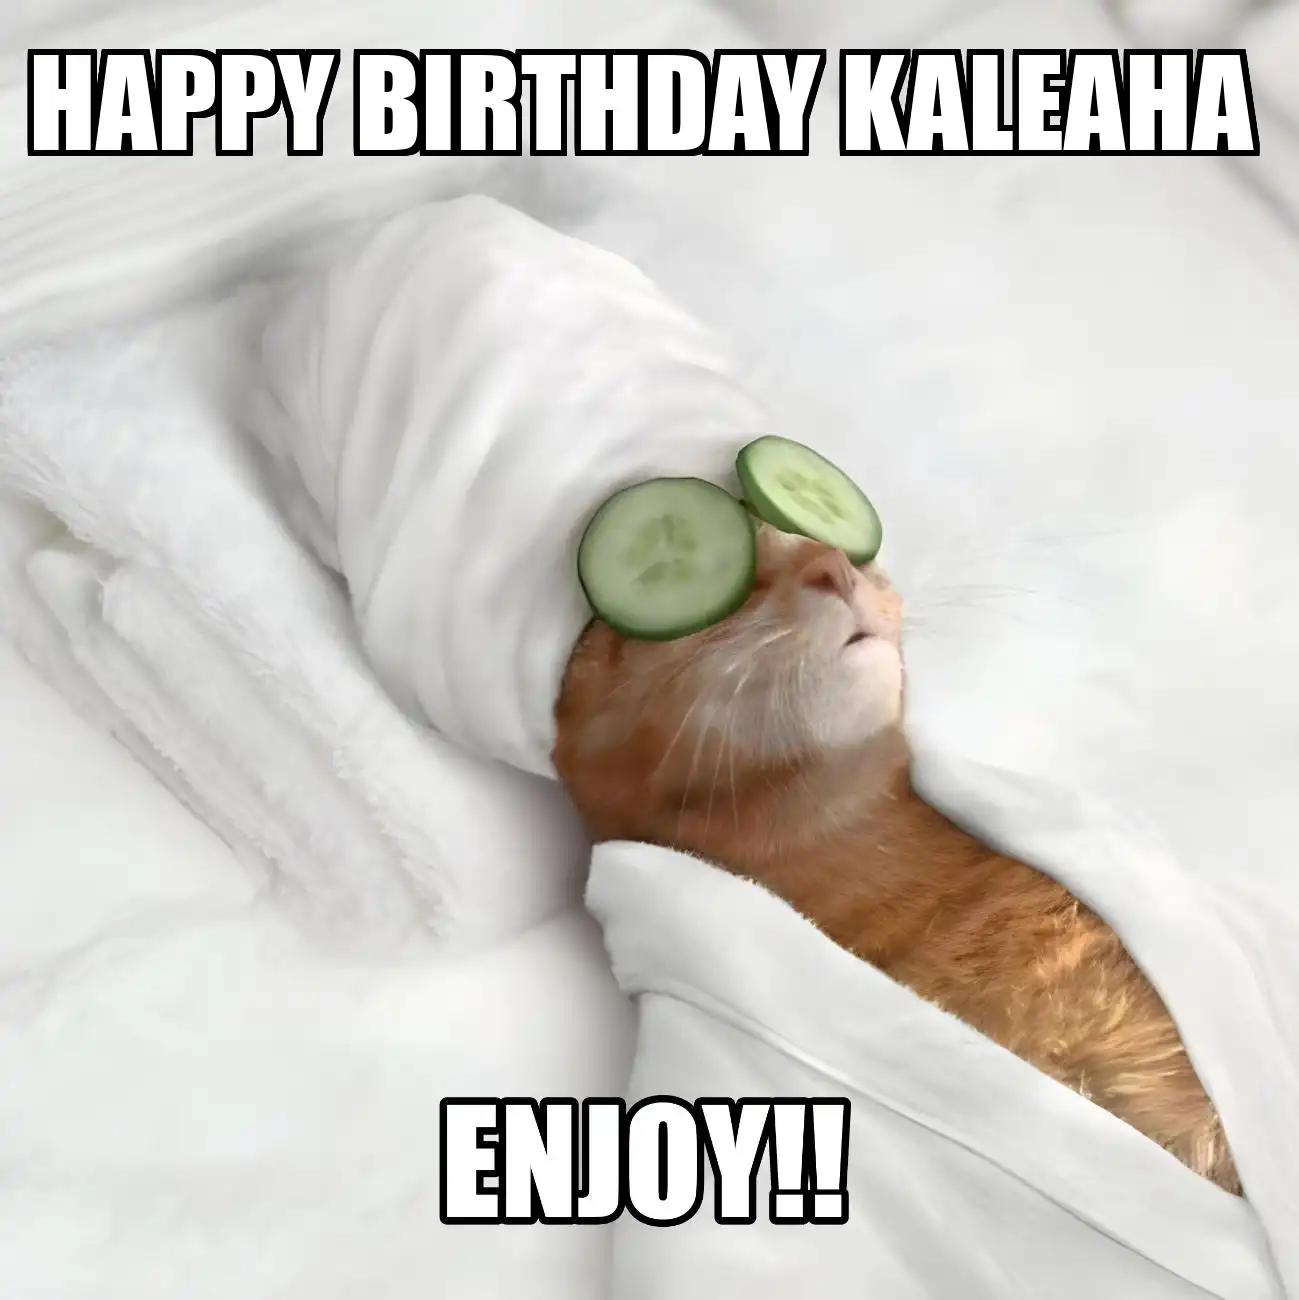 Happy Birthday Kaleaha Enjoy Cat Meme